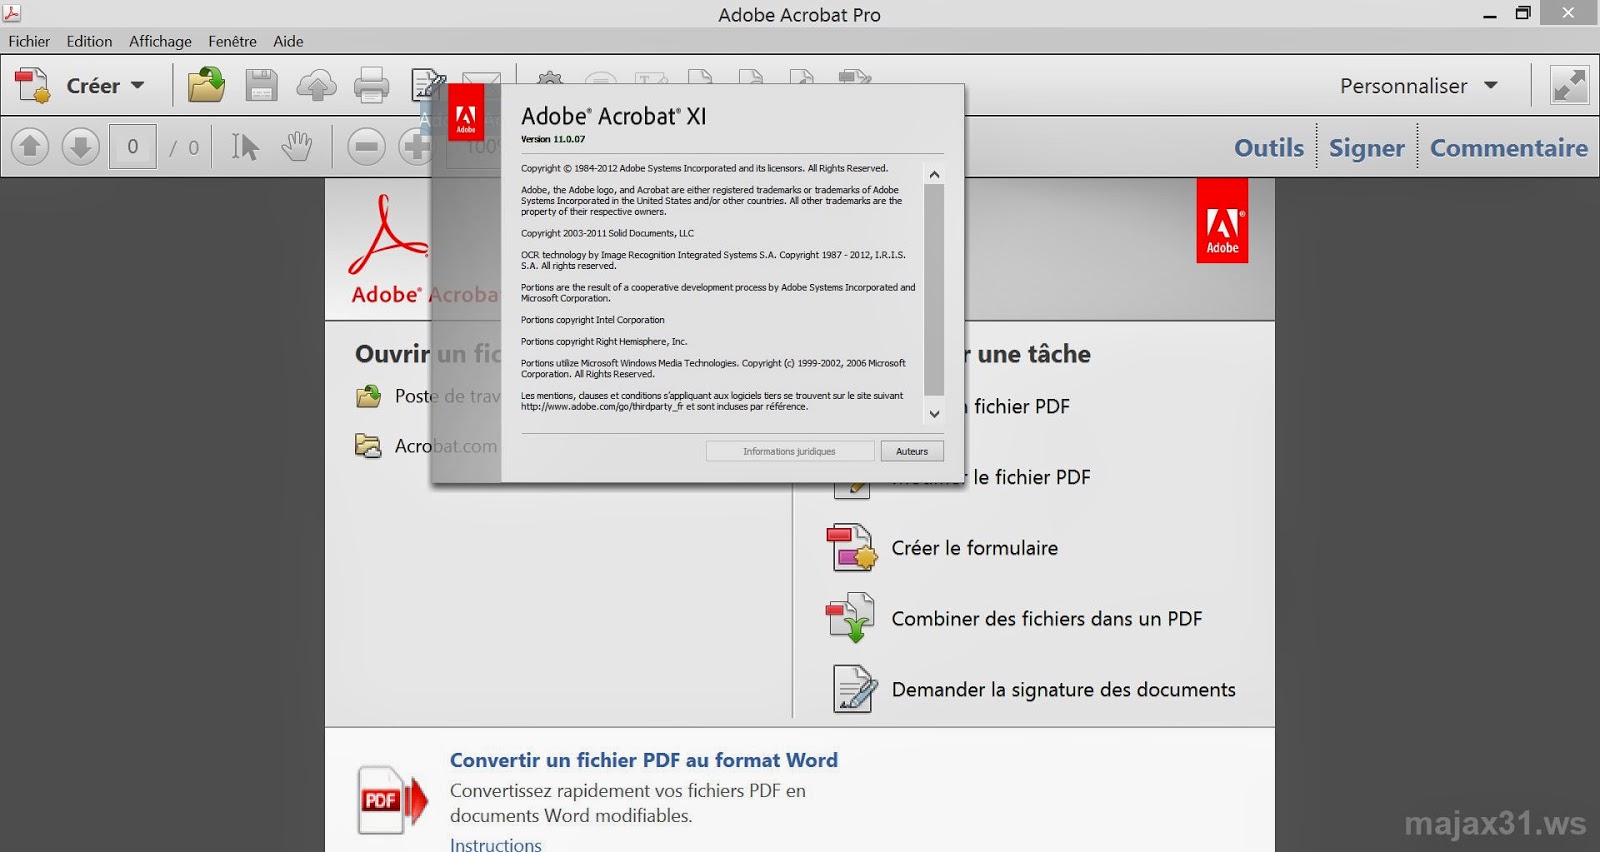 Adobe reader xi 11.0 03 full download windows 7